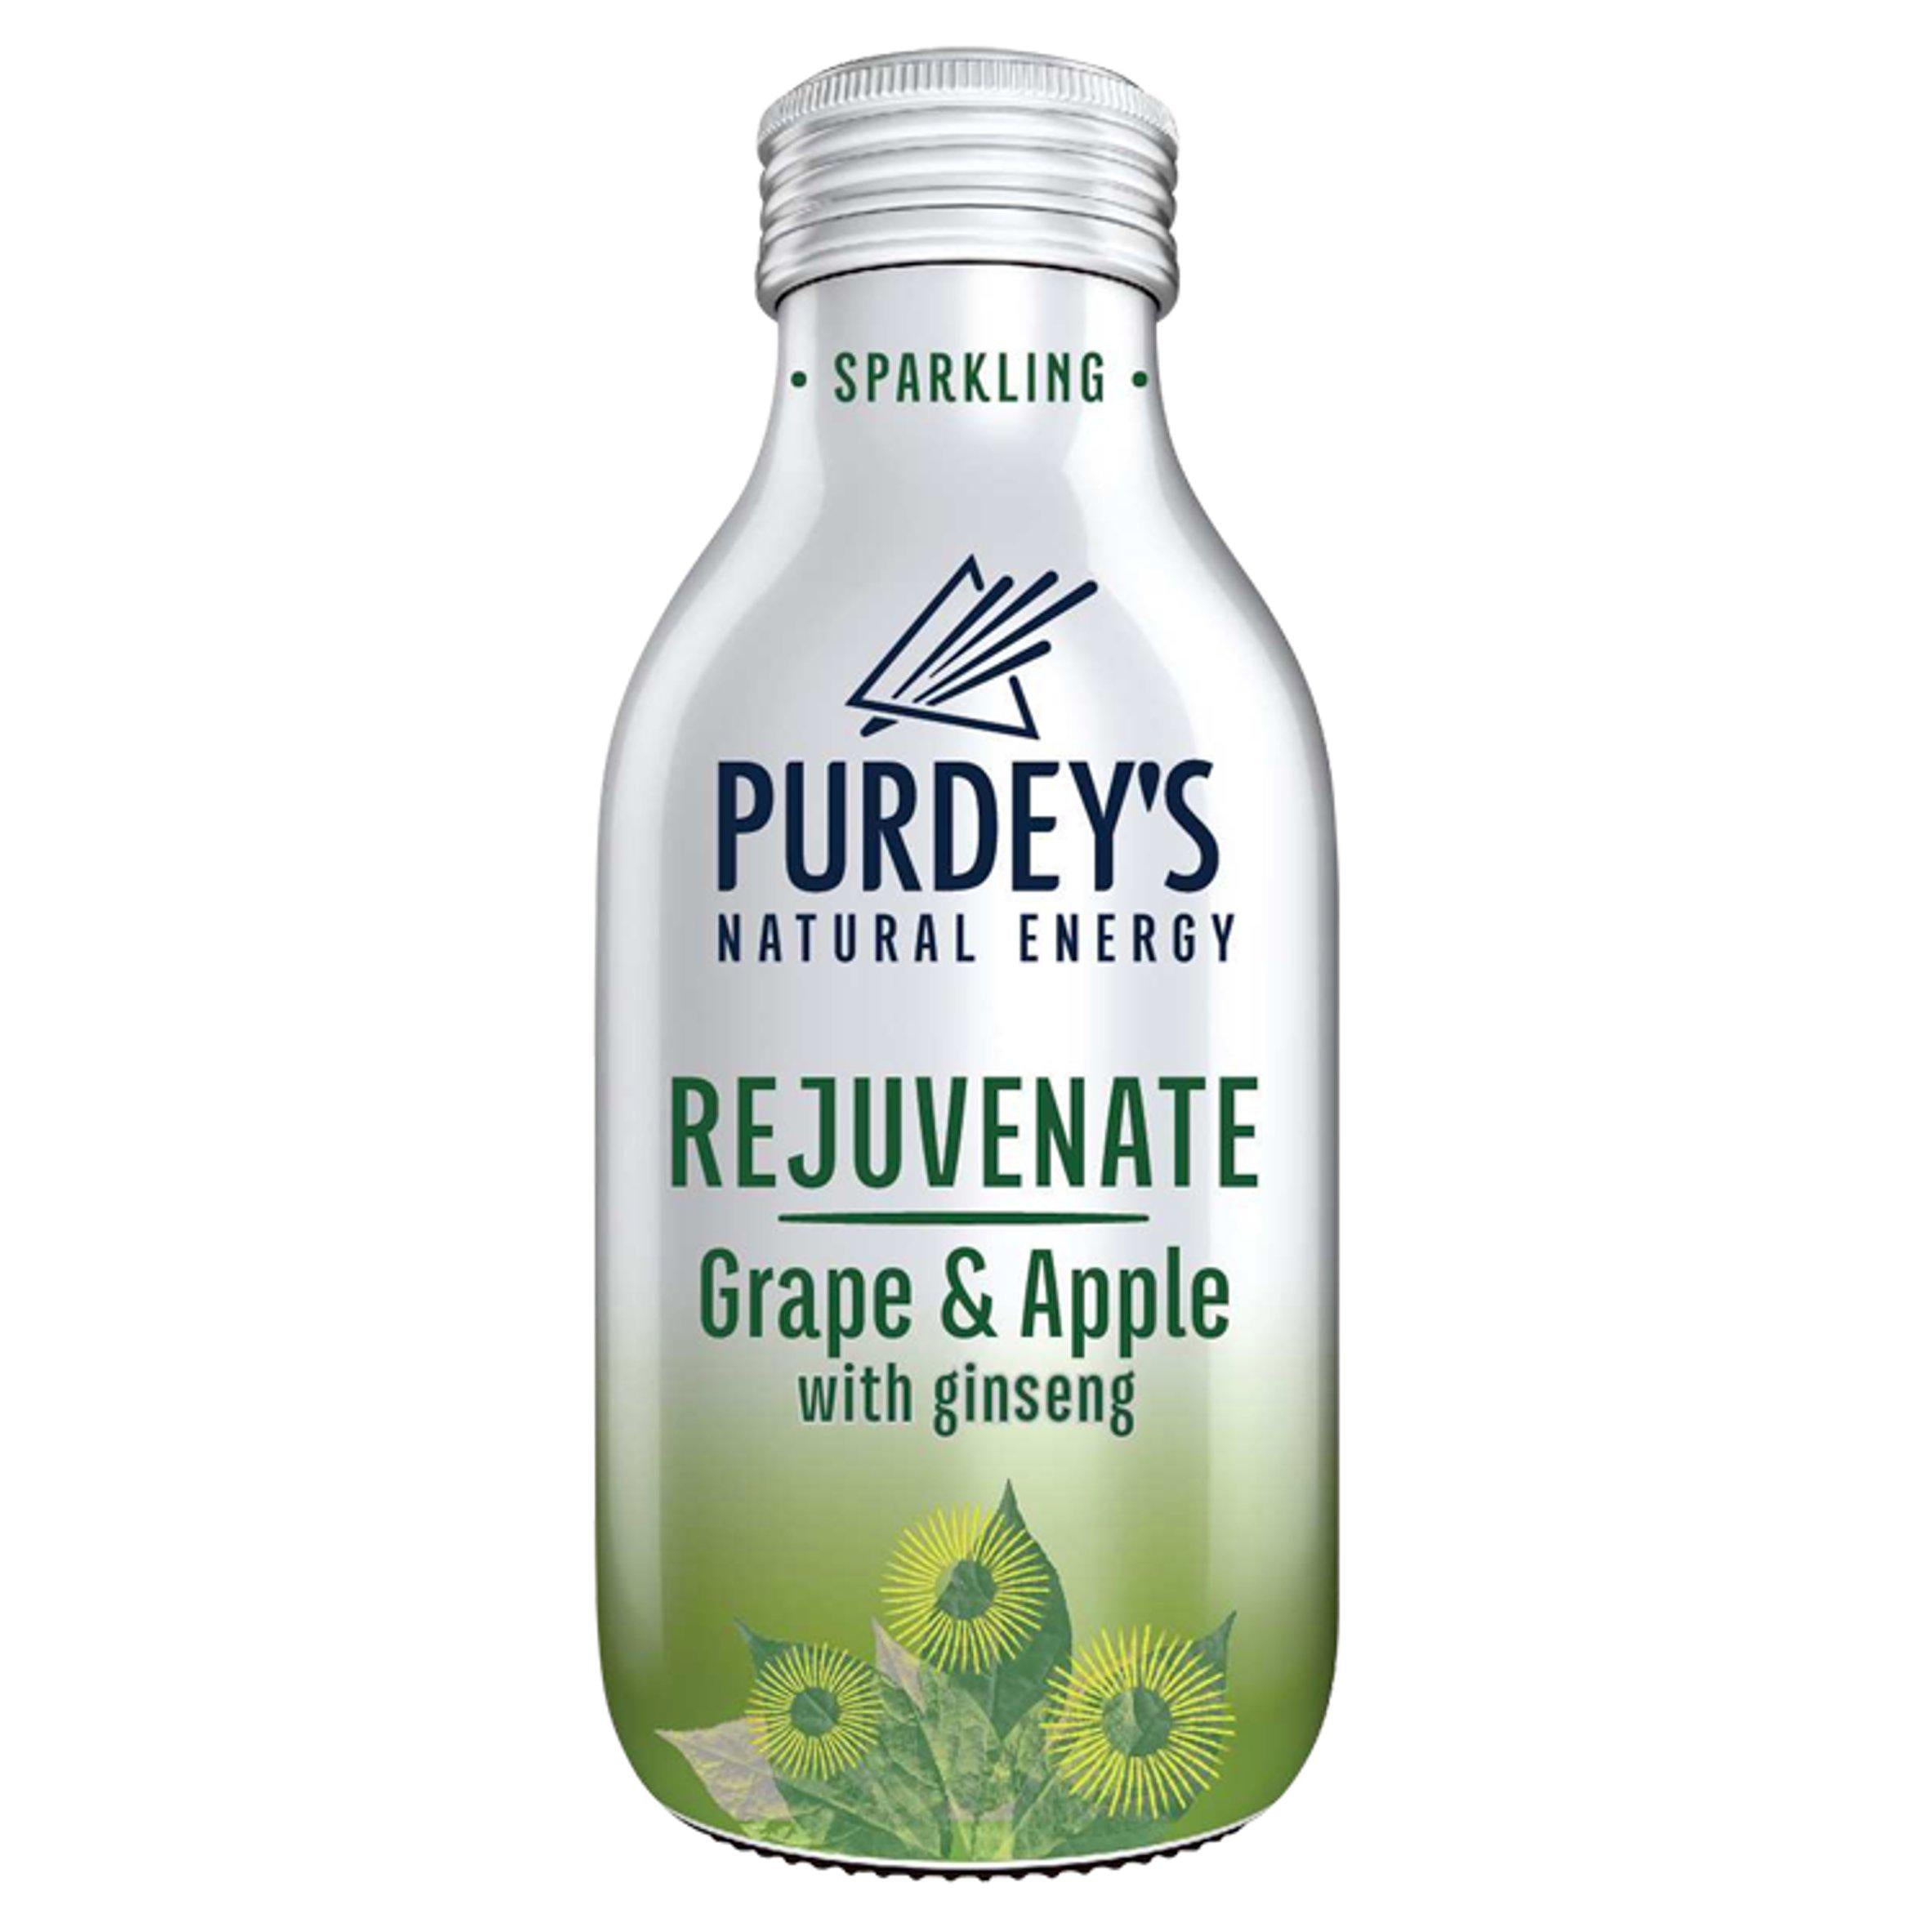 Purdey's Rejuvenate Natural Energy Drink 330ml All Sainsburys   